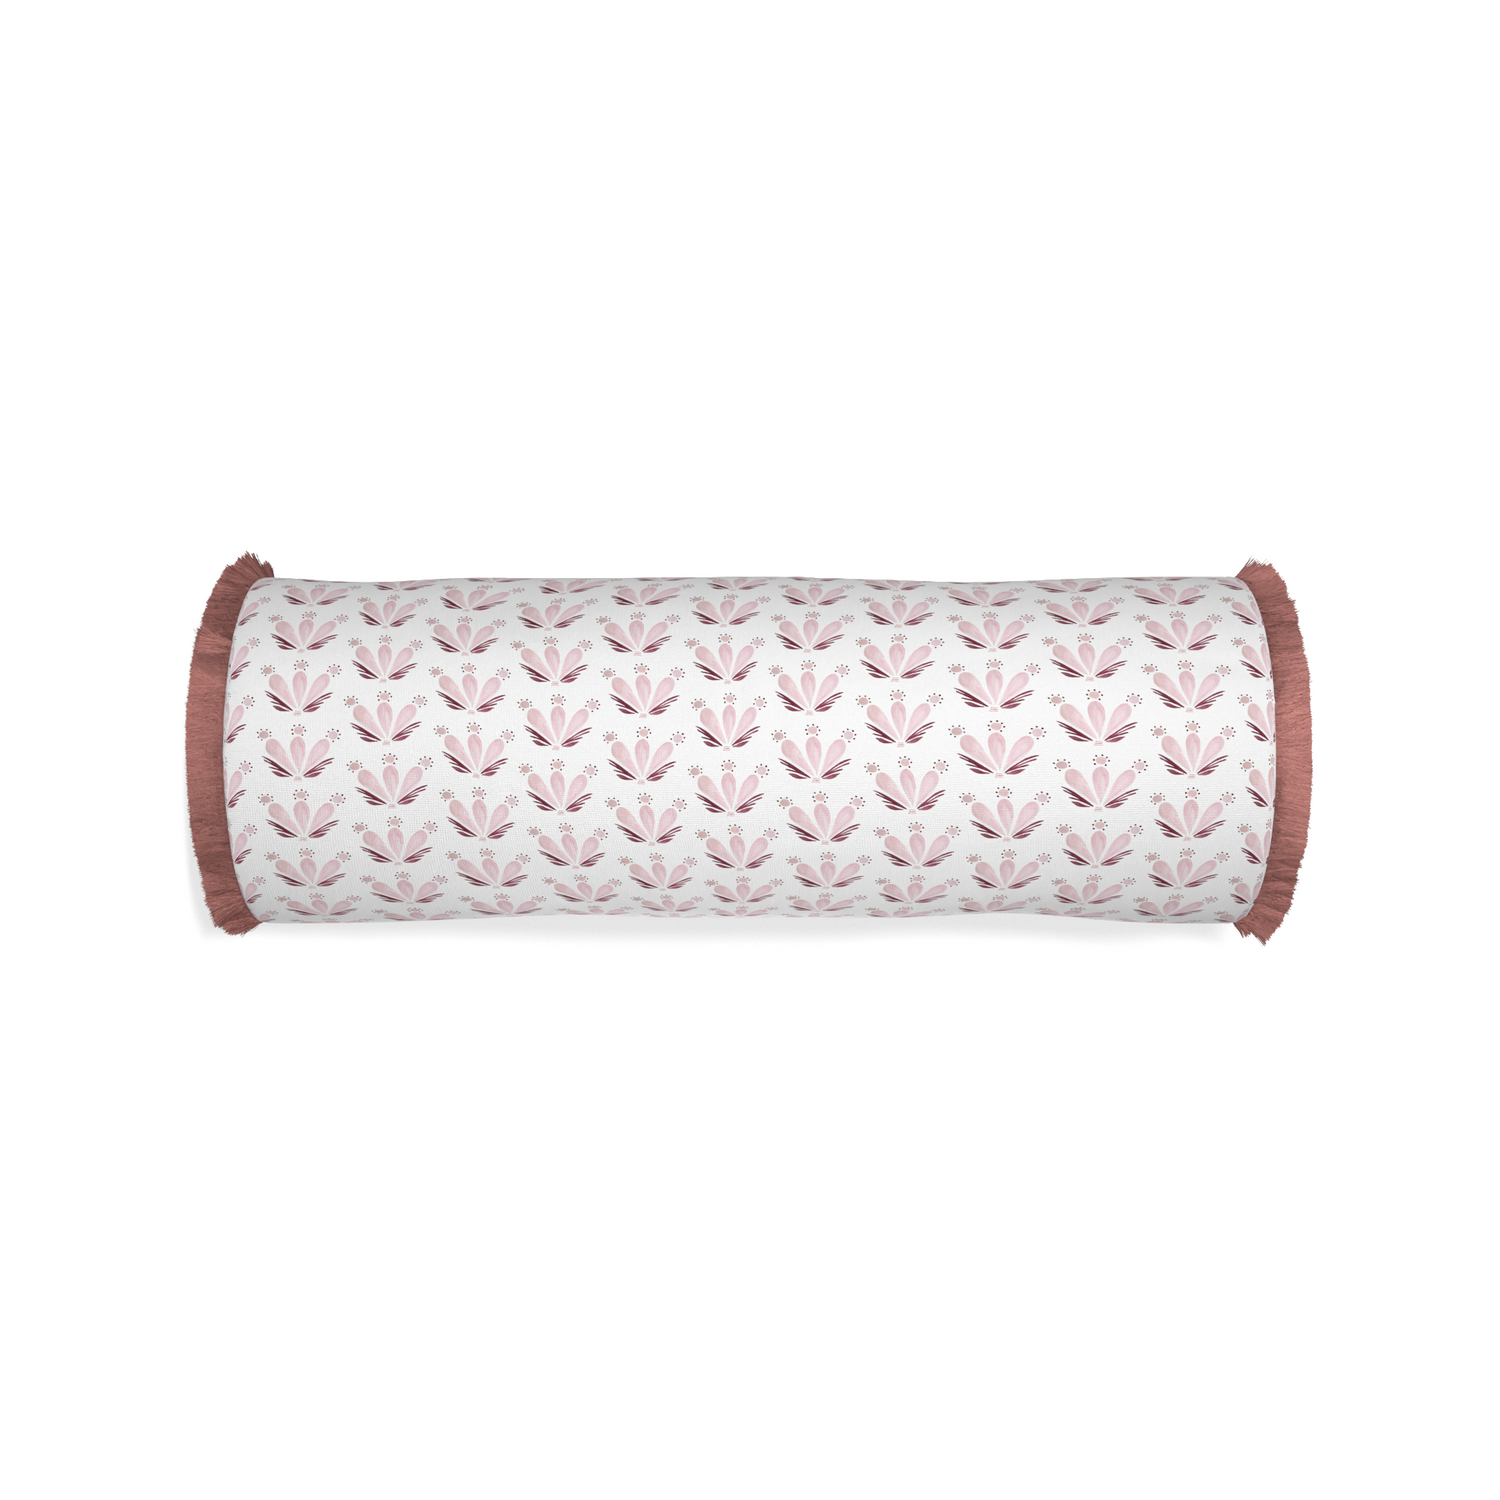 Bolster serena pink custom pillow with d fringe on white background